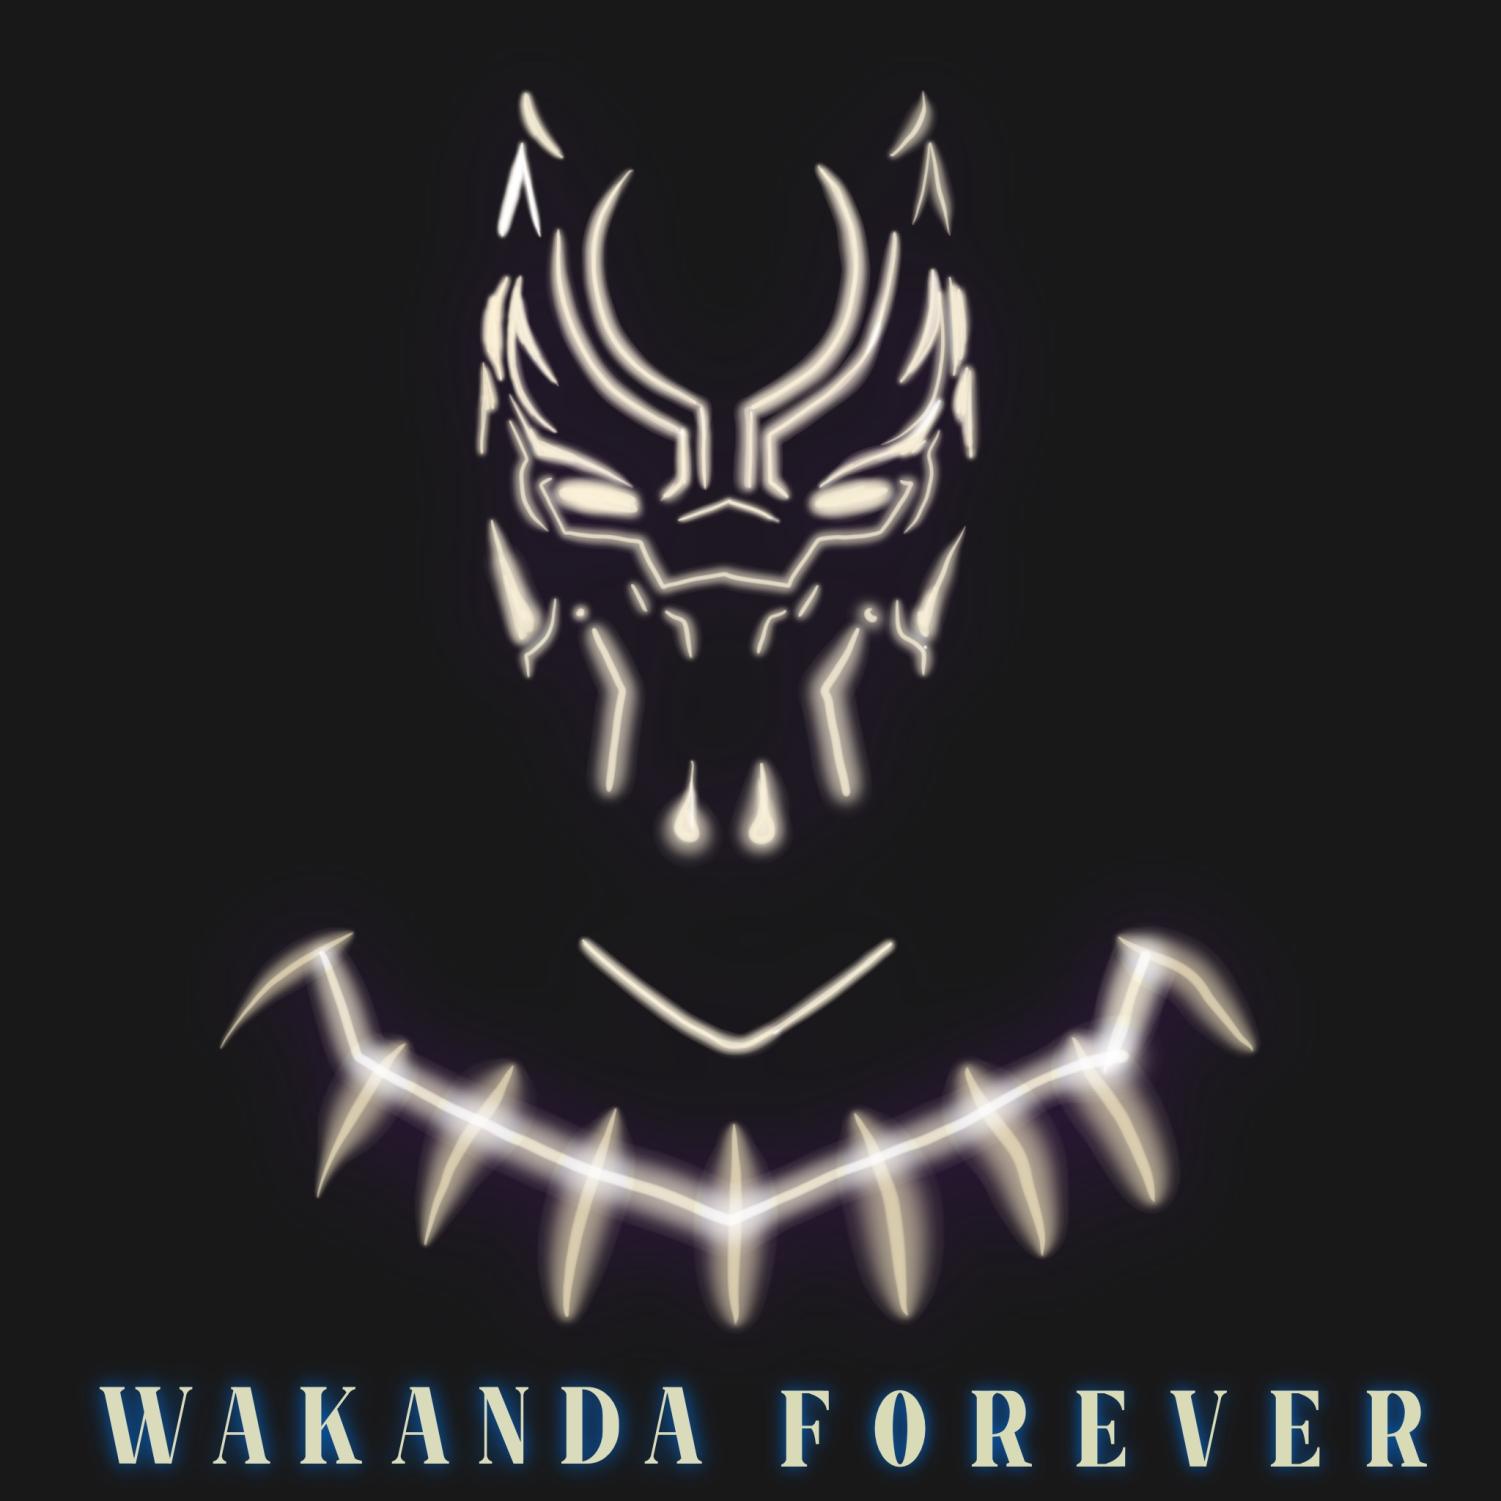 Amazon.com: Ata-Boy Wakanda Forever Magnet - Black Panther Insignia 2.5